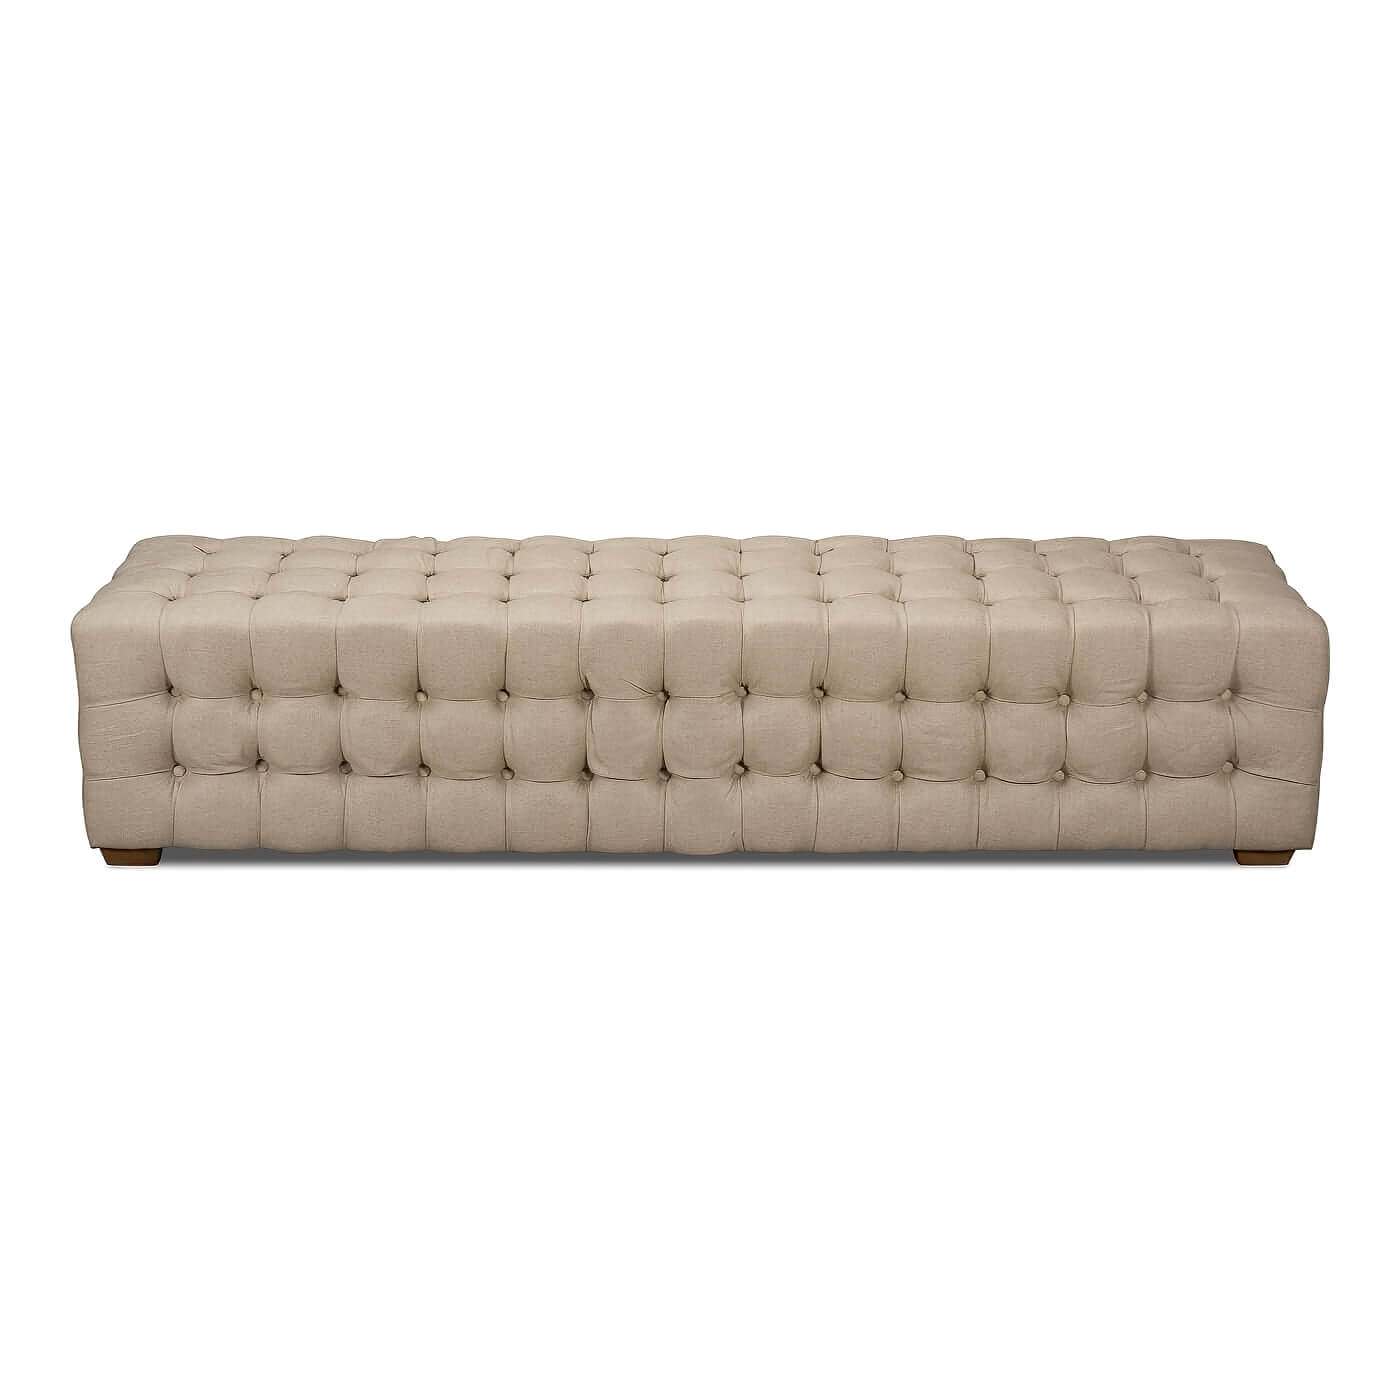 Modern Tufted Linen Upholstered Bench - English Georgian America